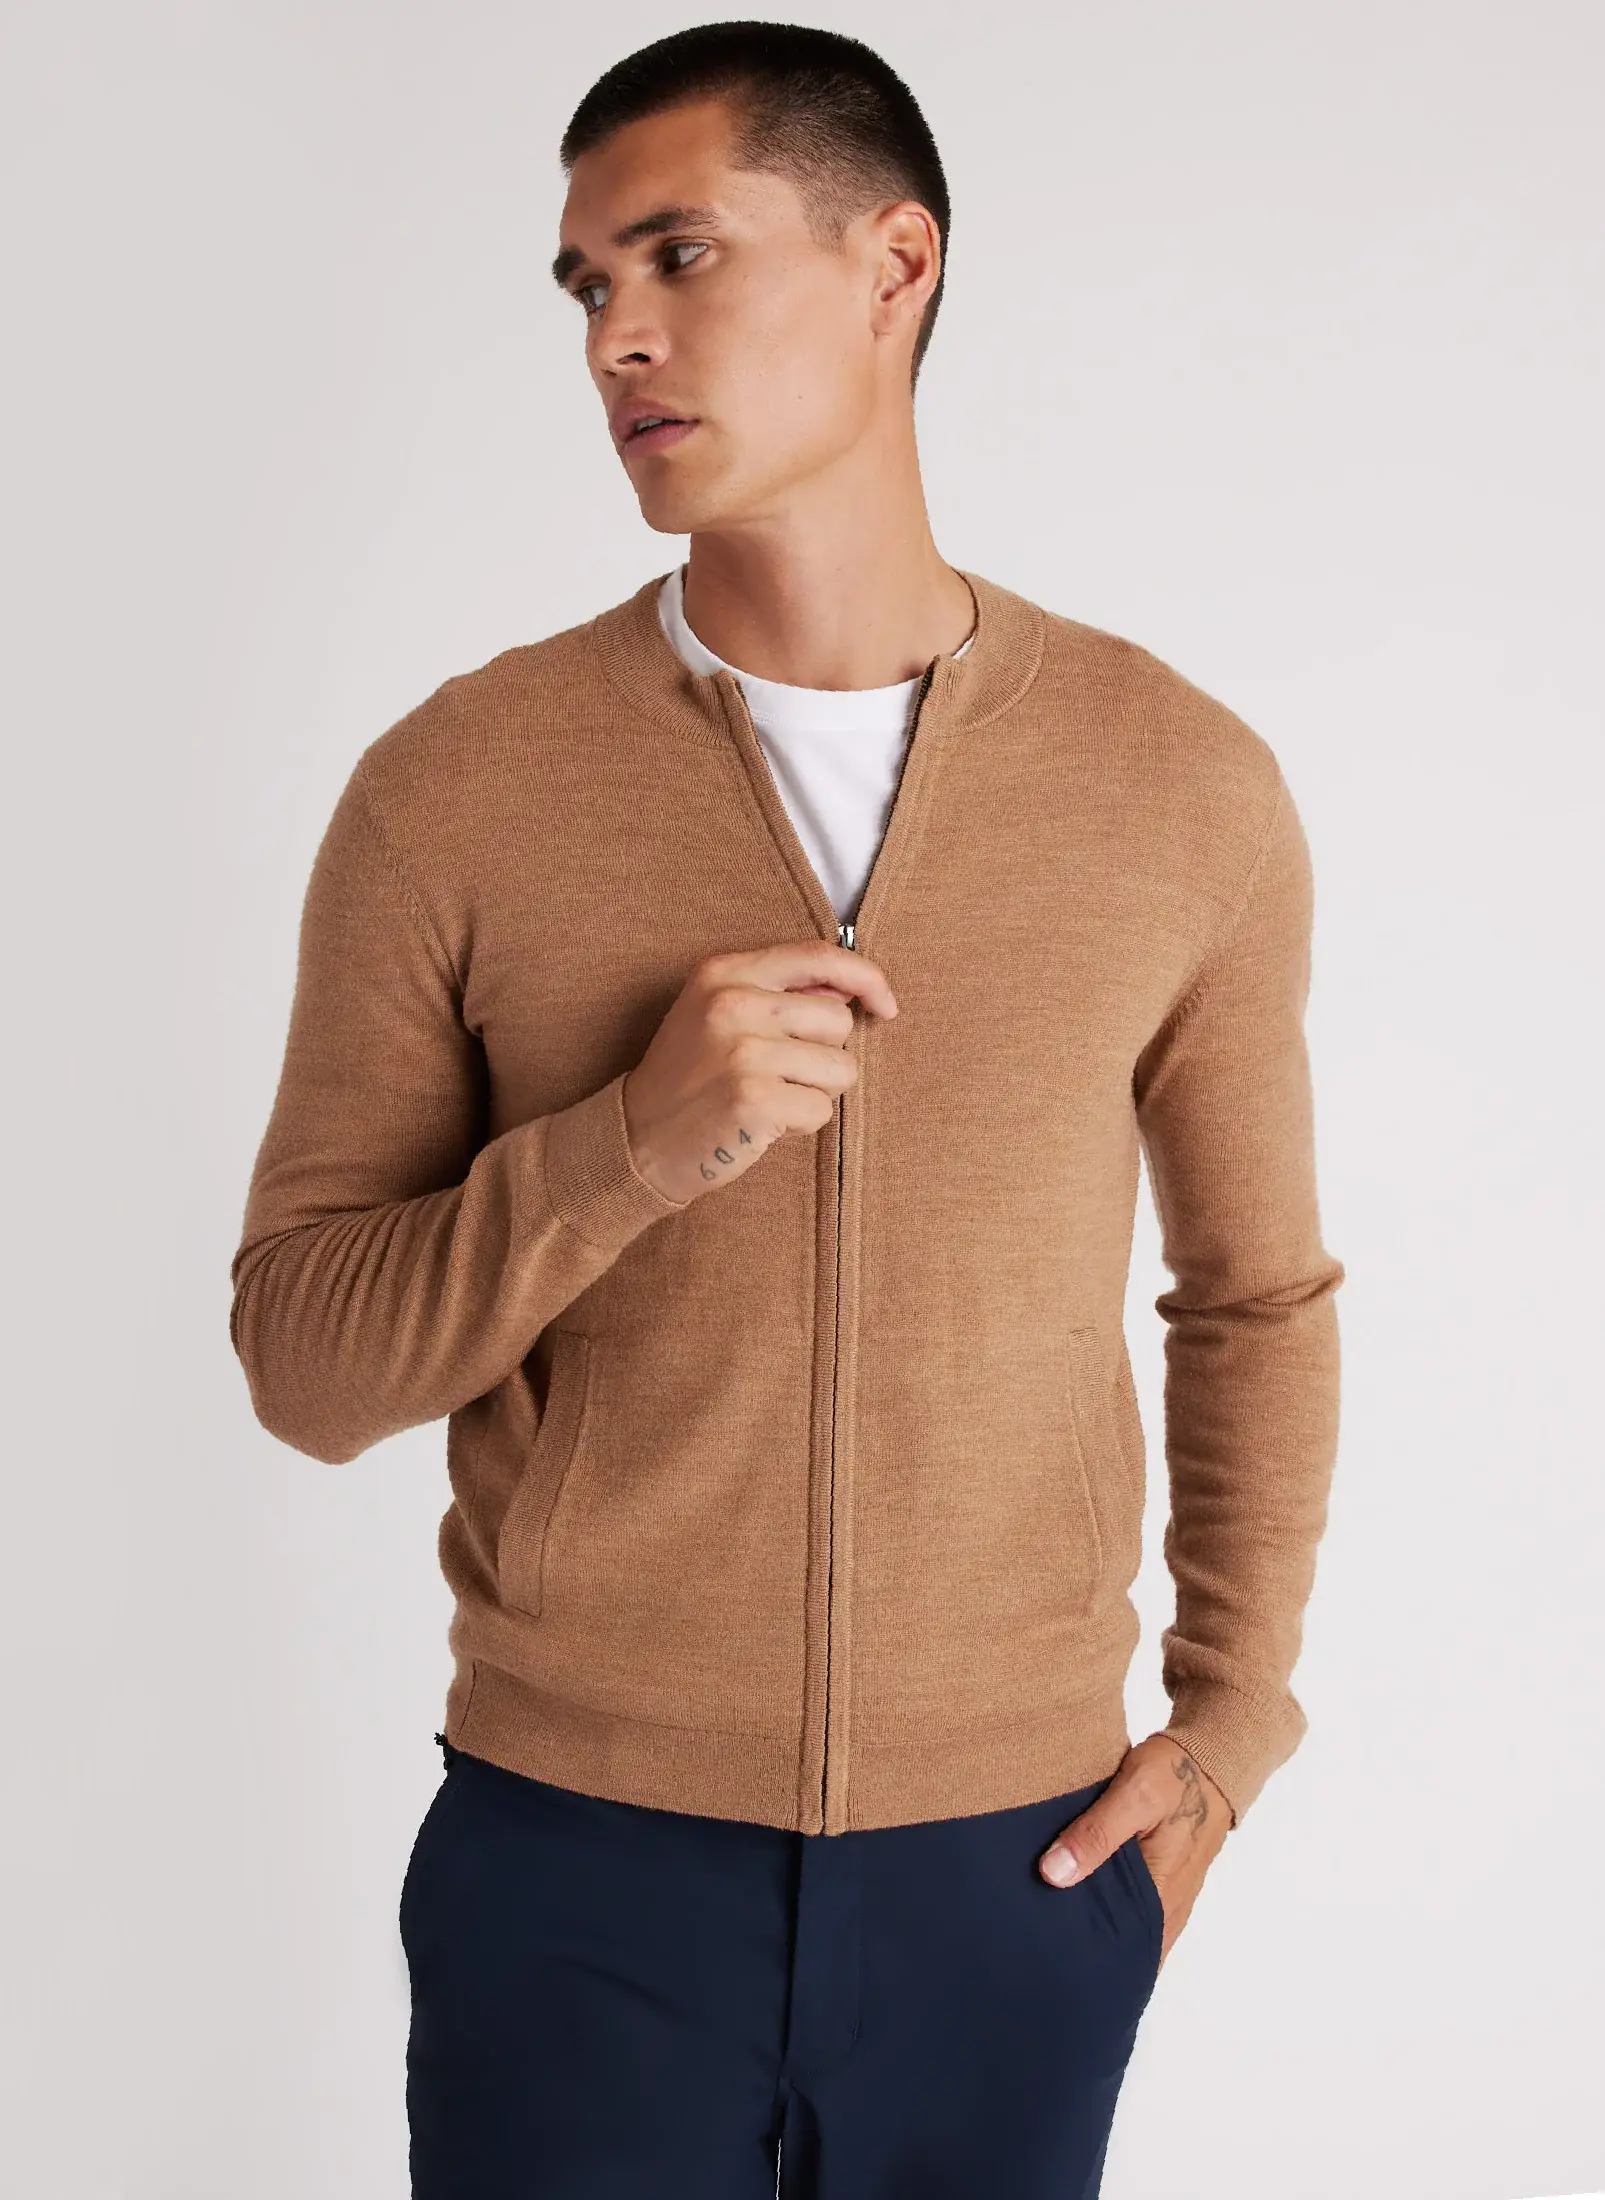 Kit And Ace Pender Full Zip Merino Sweater. 1